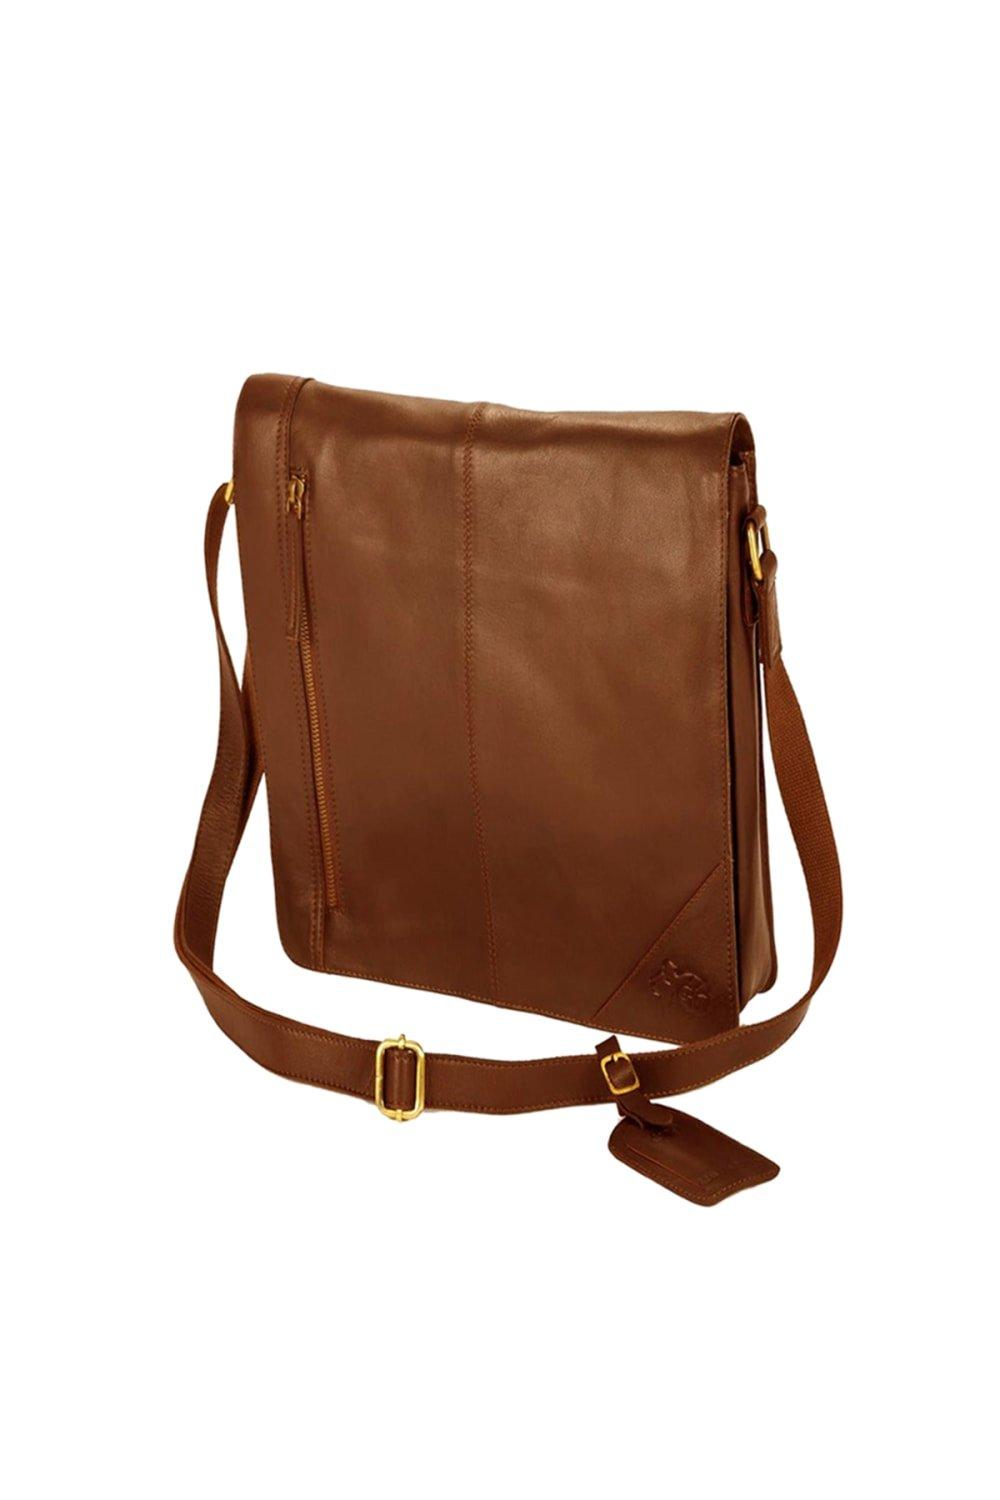 Узкая сумка-мессенджер Eastern Counties Leather, коричневый кожаный рюкзак ross с потертостями eastern counties leather коричневый